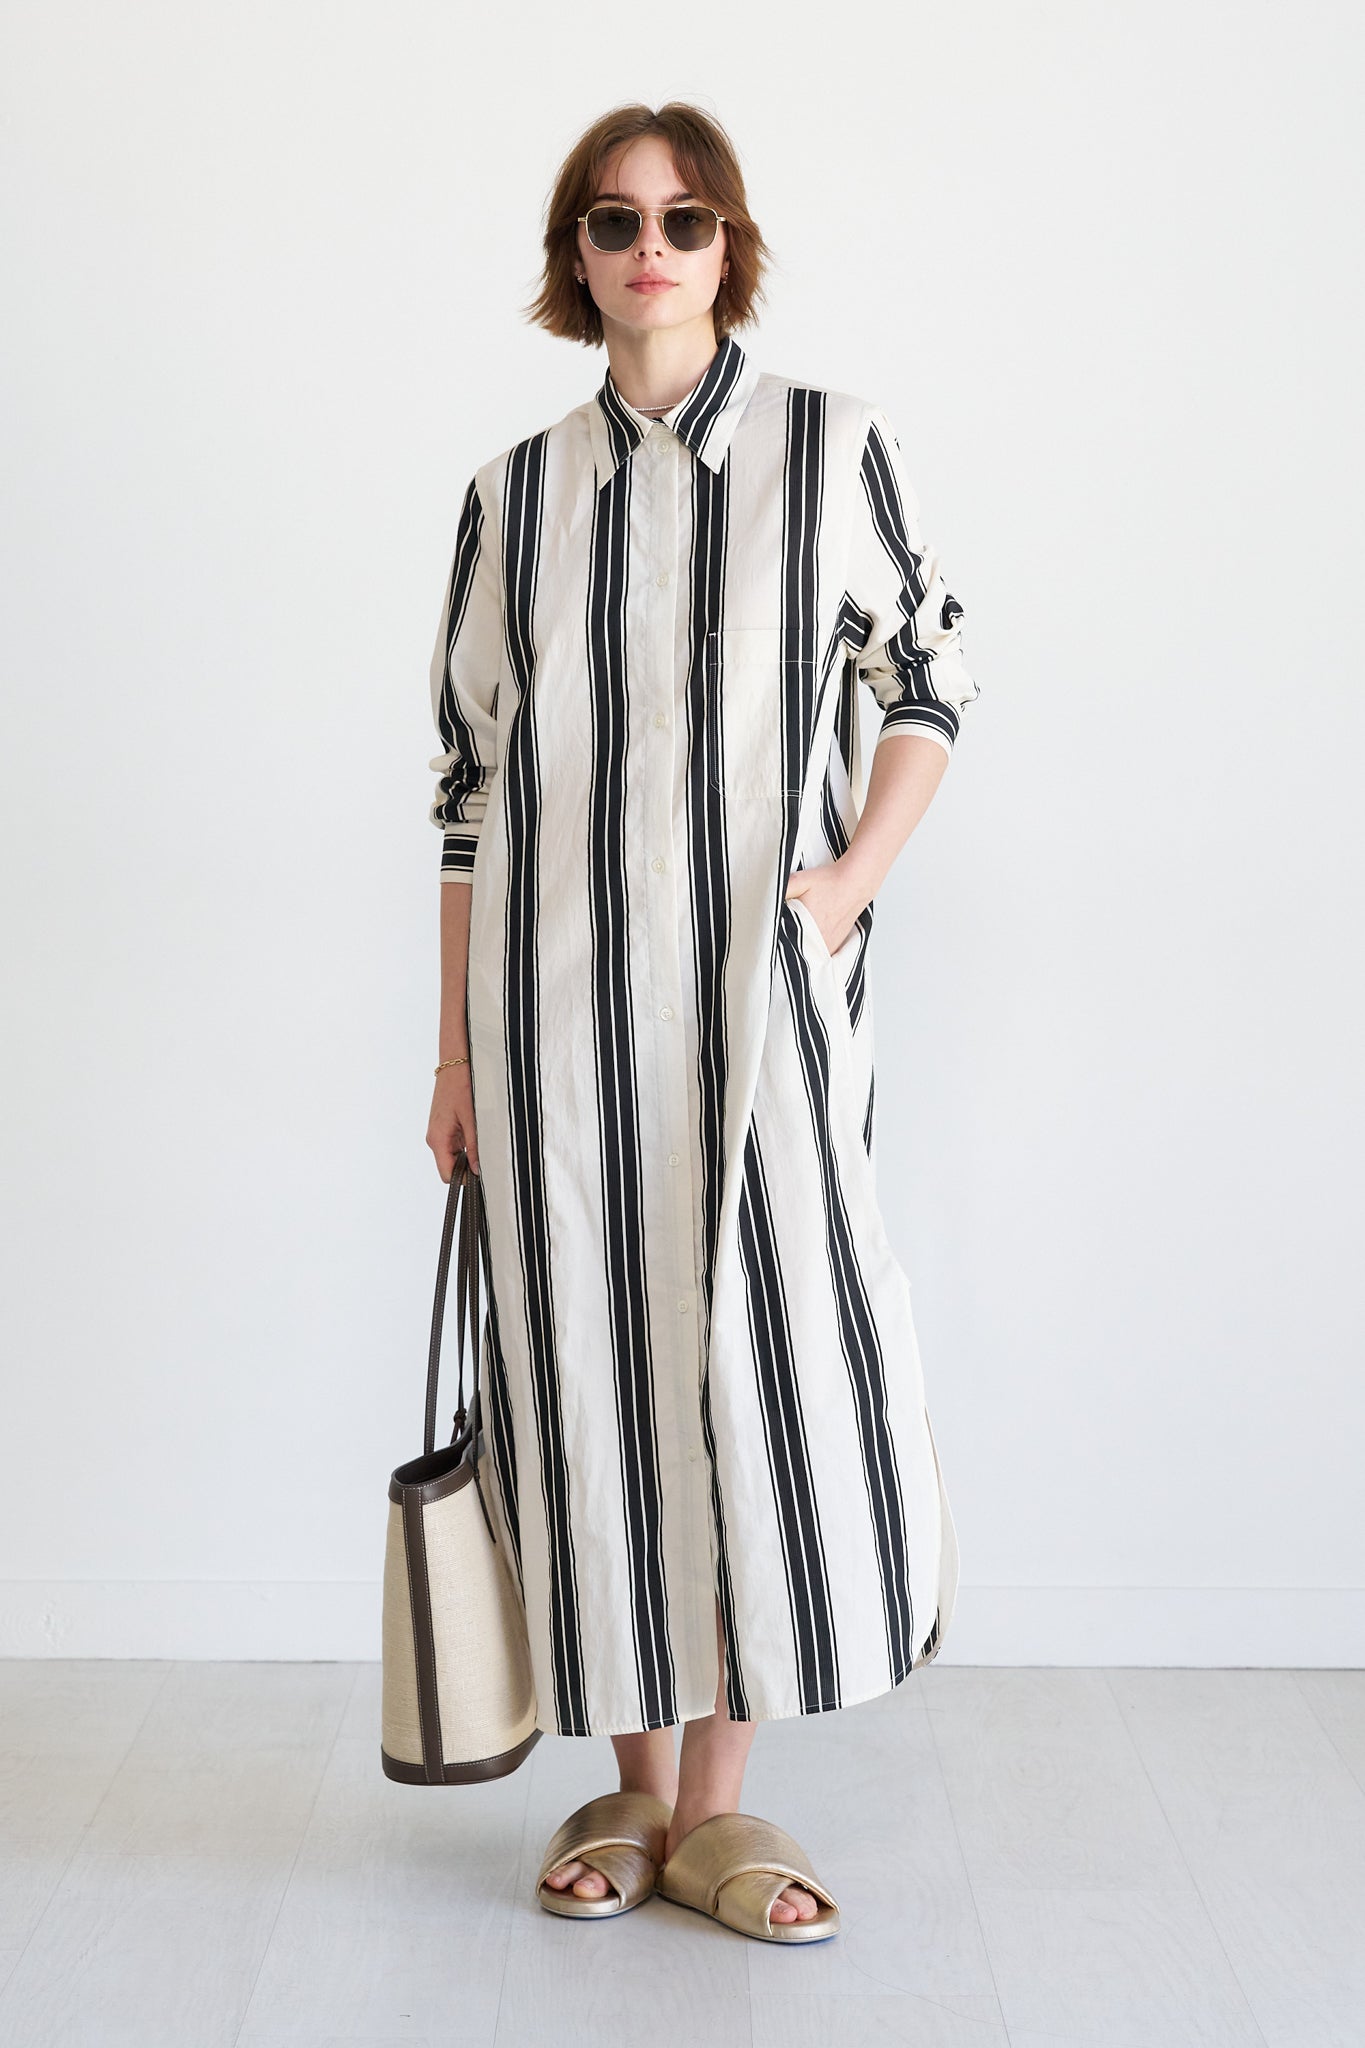 TOTEME - Jaquard Striped Tunic Dress, Black and White